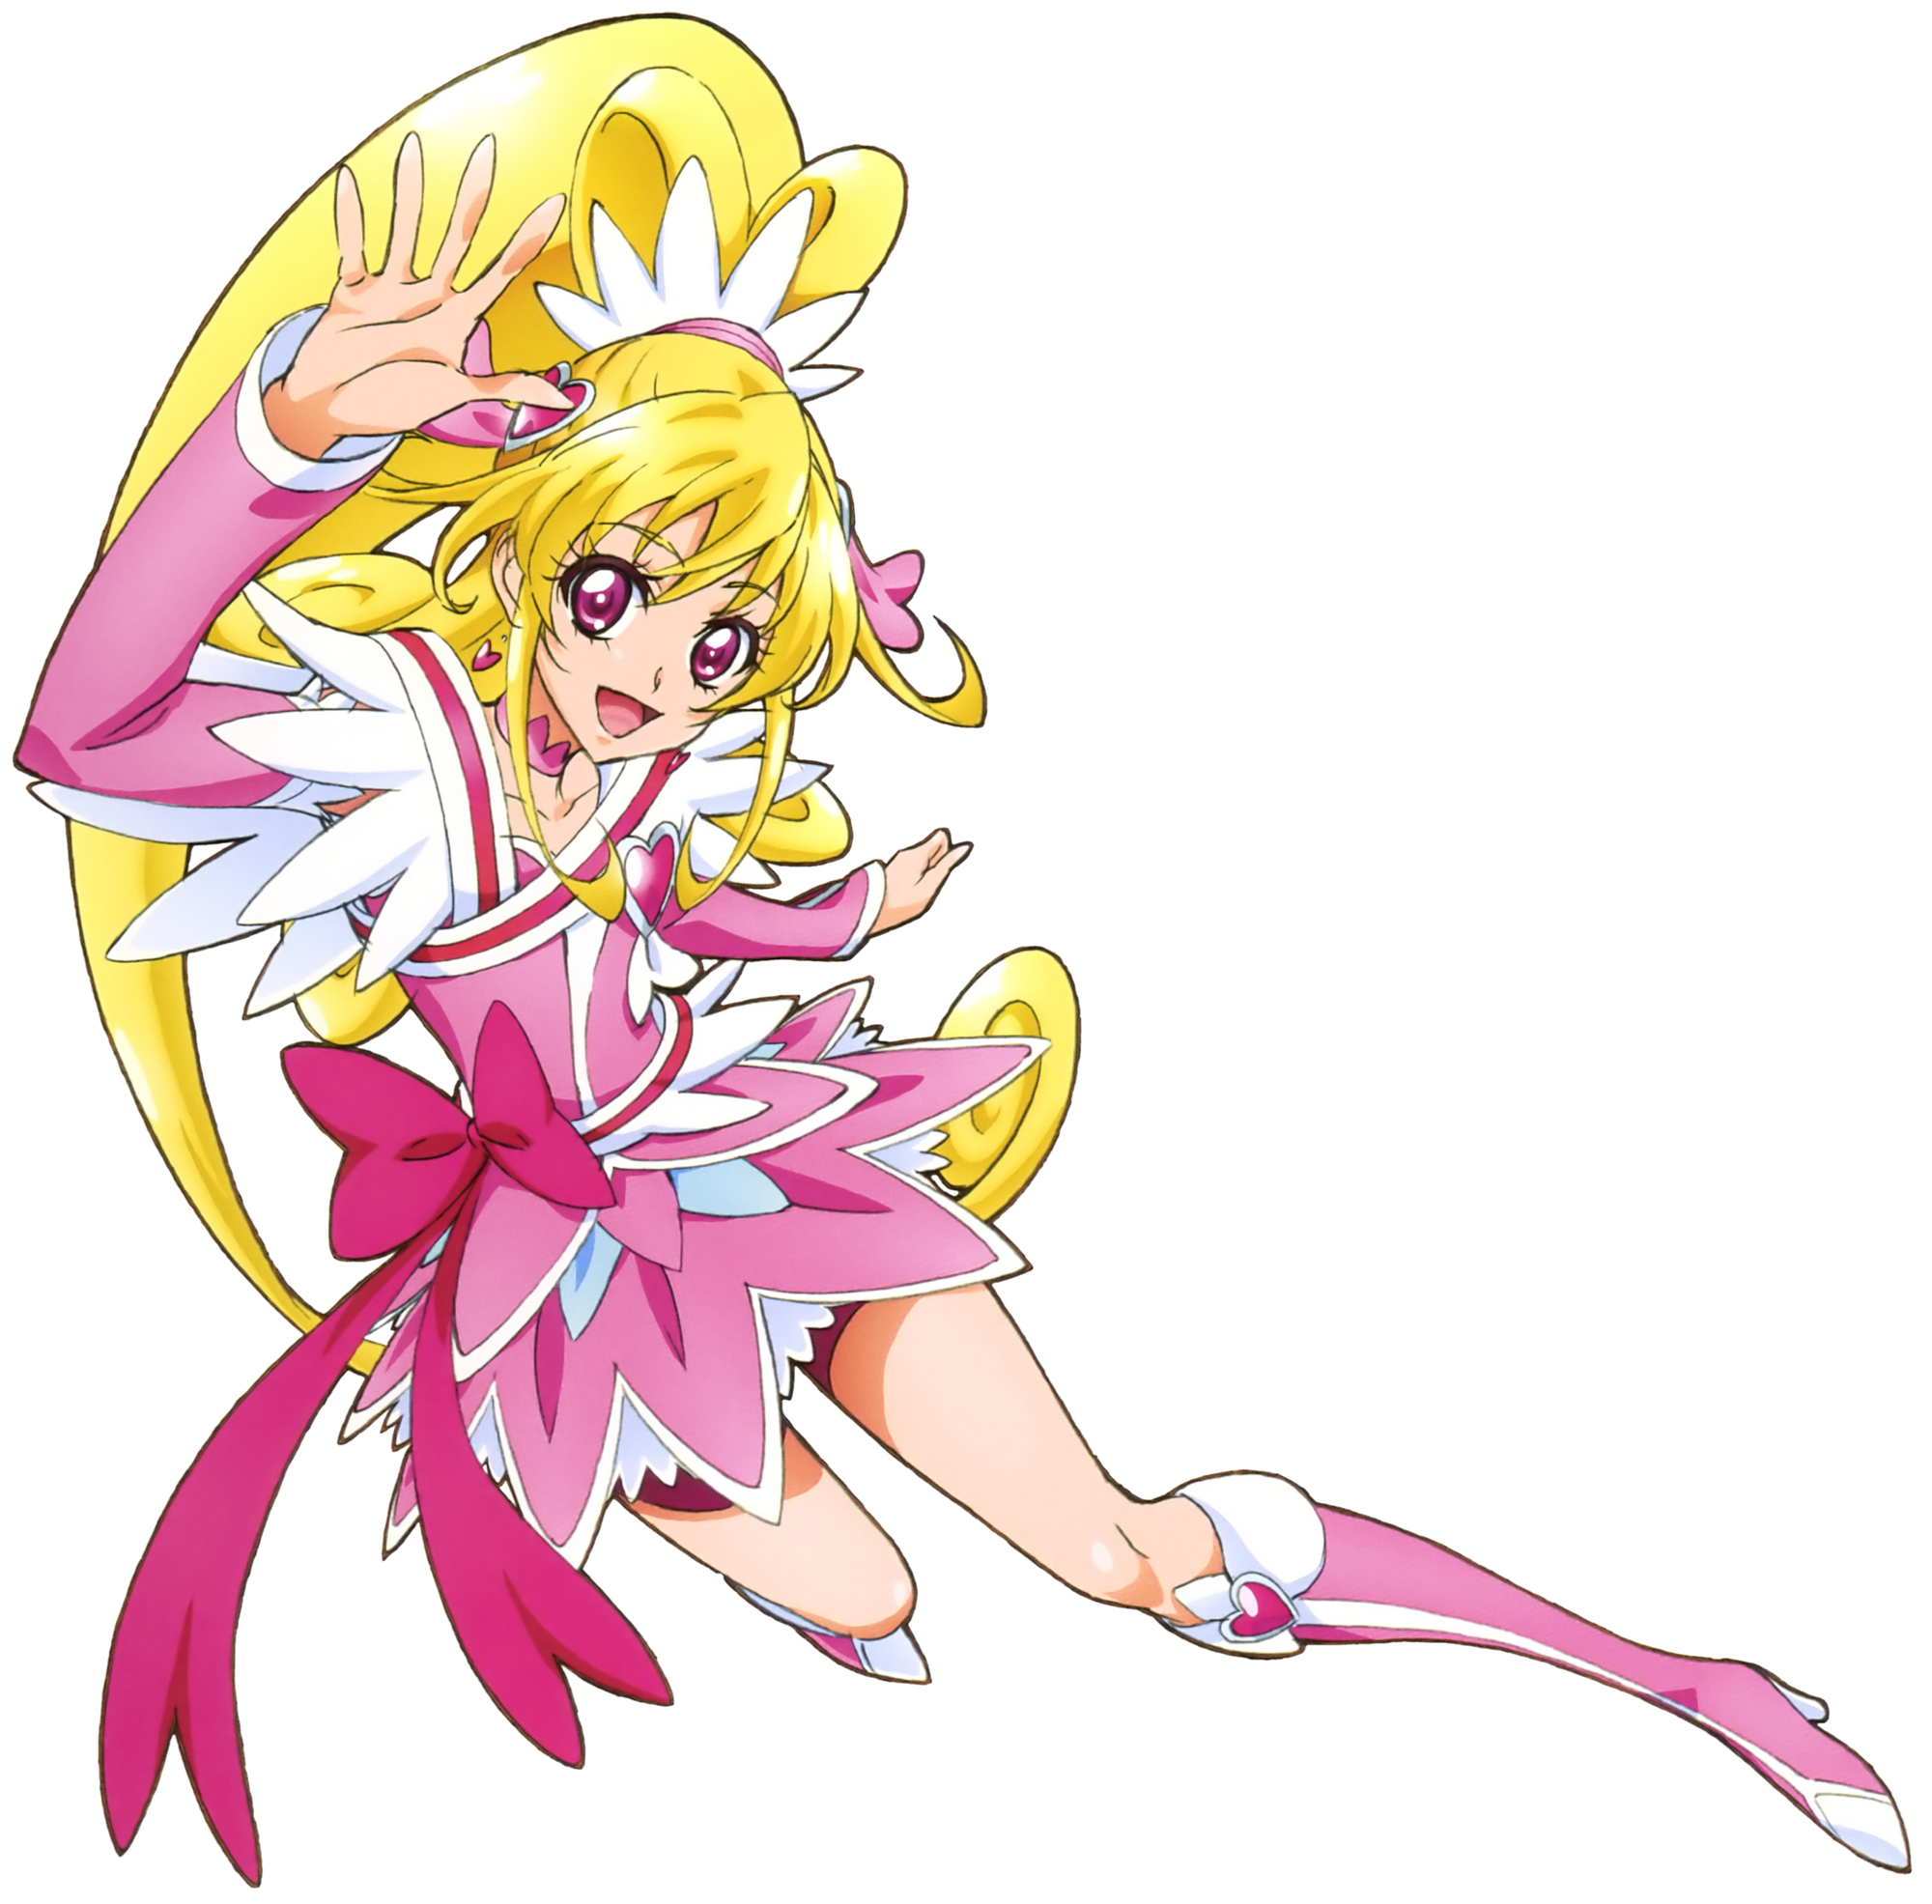 Image Doki Doki Pretty Cure Cure Heart Pose4png Magical Girl Mahou Shoujo 魔法少女 Wiki 9369